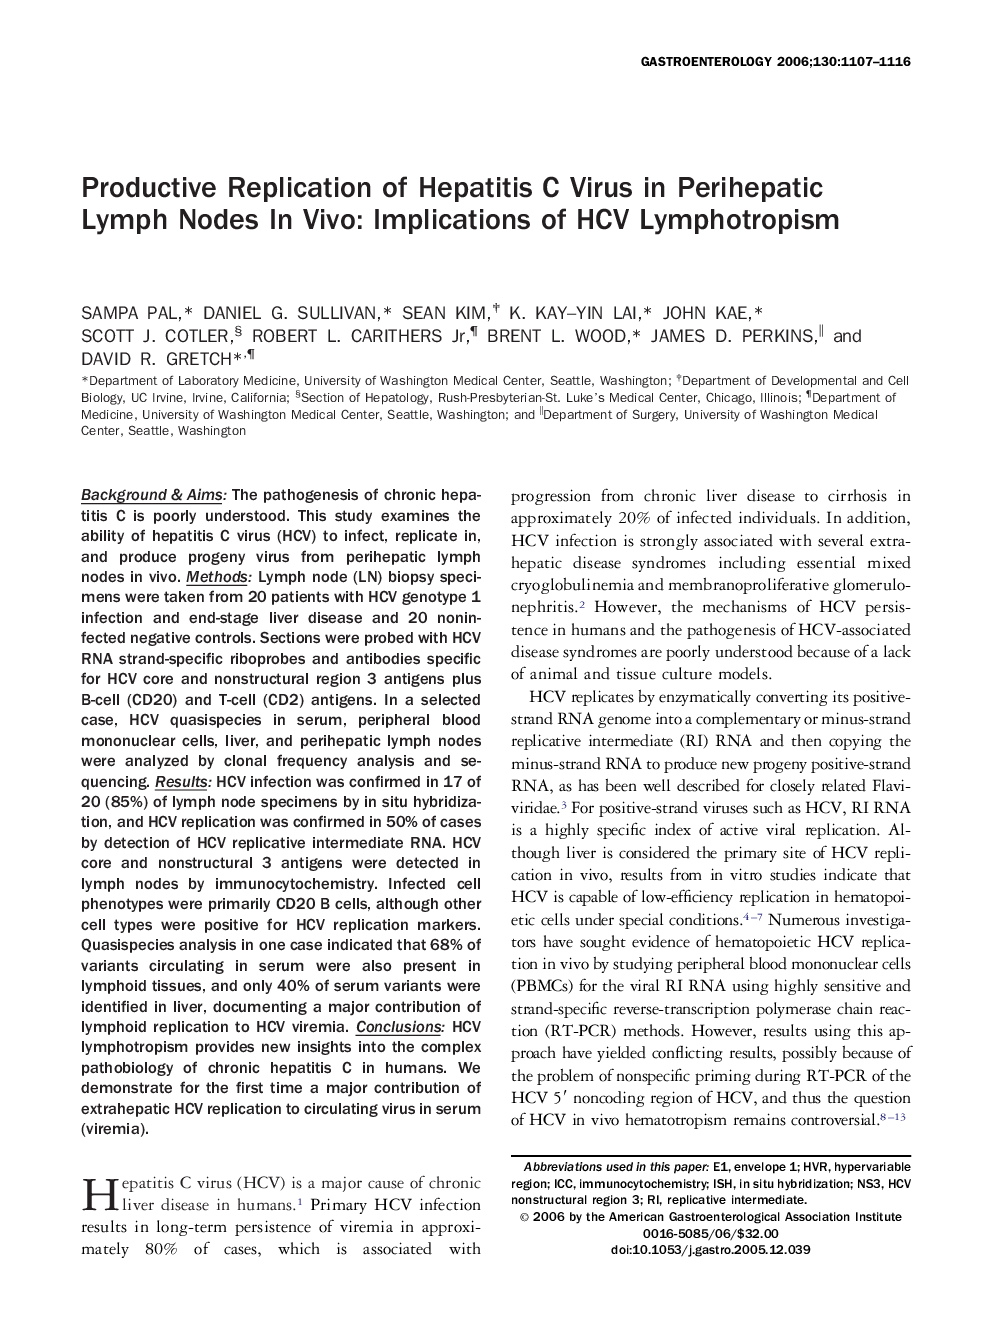 Productive Replication of Hepatitis C Virus in Perihepatic Lymph Nodes In Vivo: Implications of HCV Lymphotropism